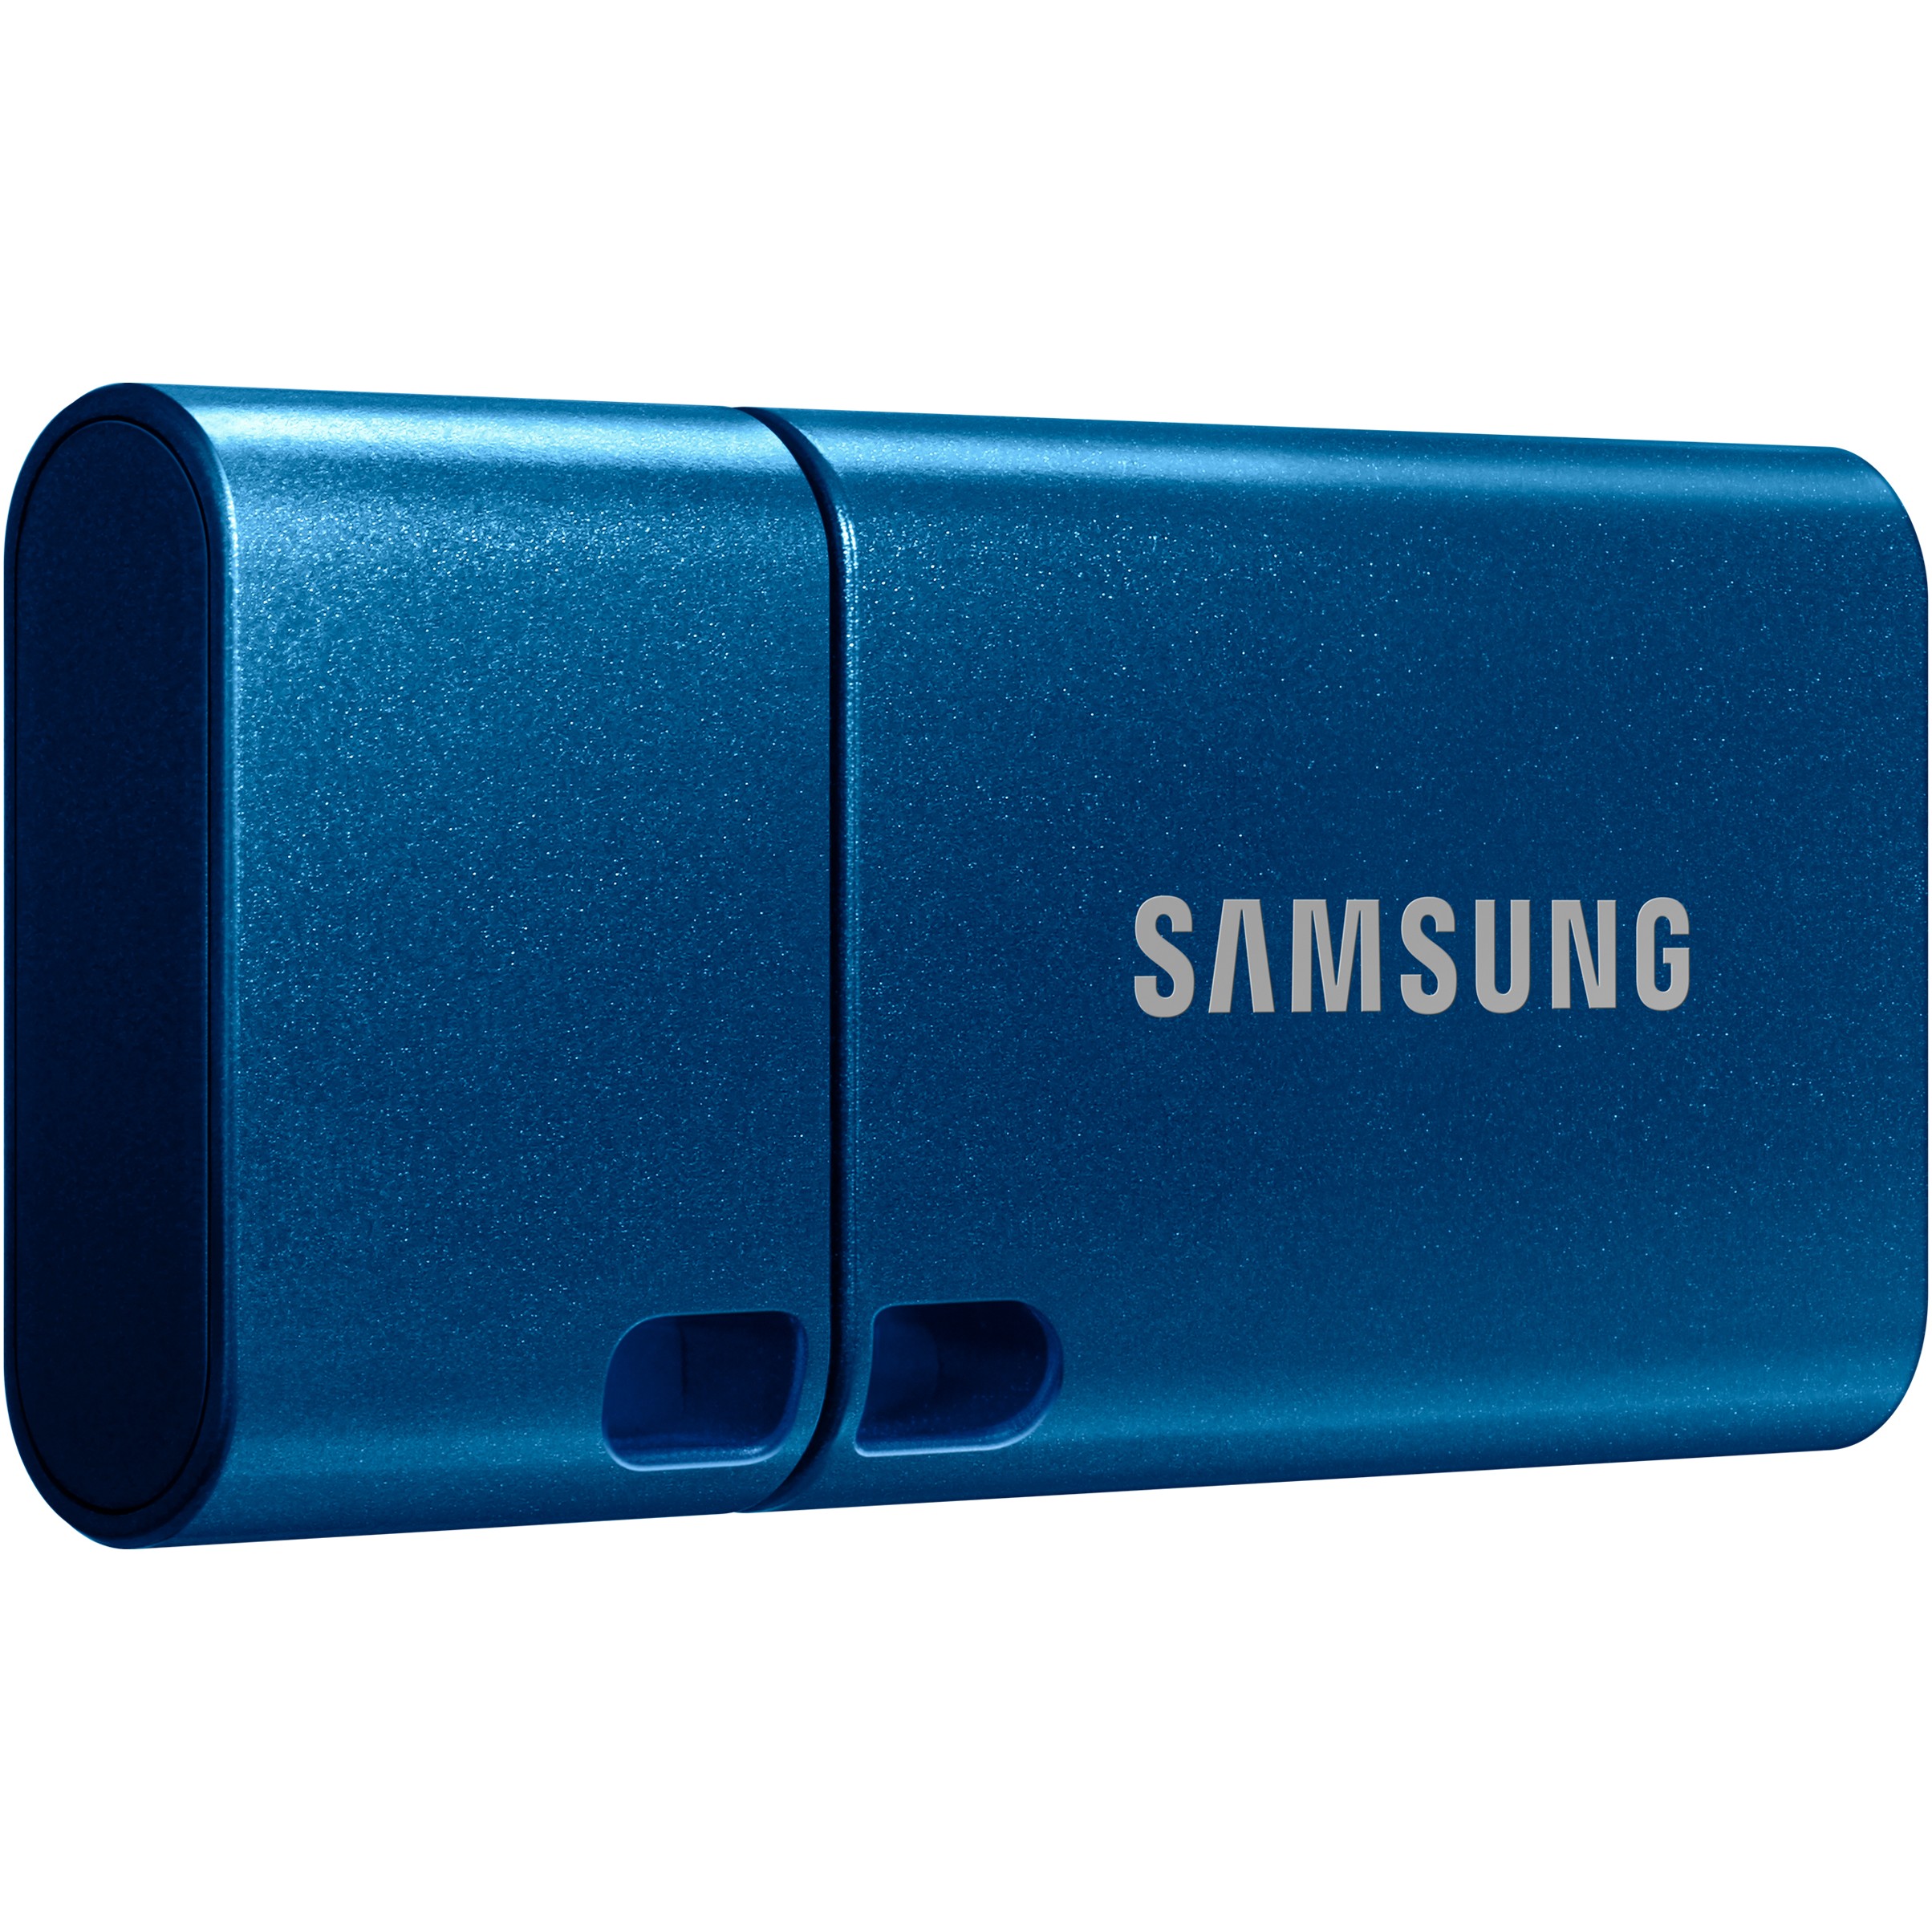 SAMSUNG MUF-128DA/APC, USB-Stick, Samsung MUF-128DA USB  (BILD3)